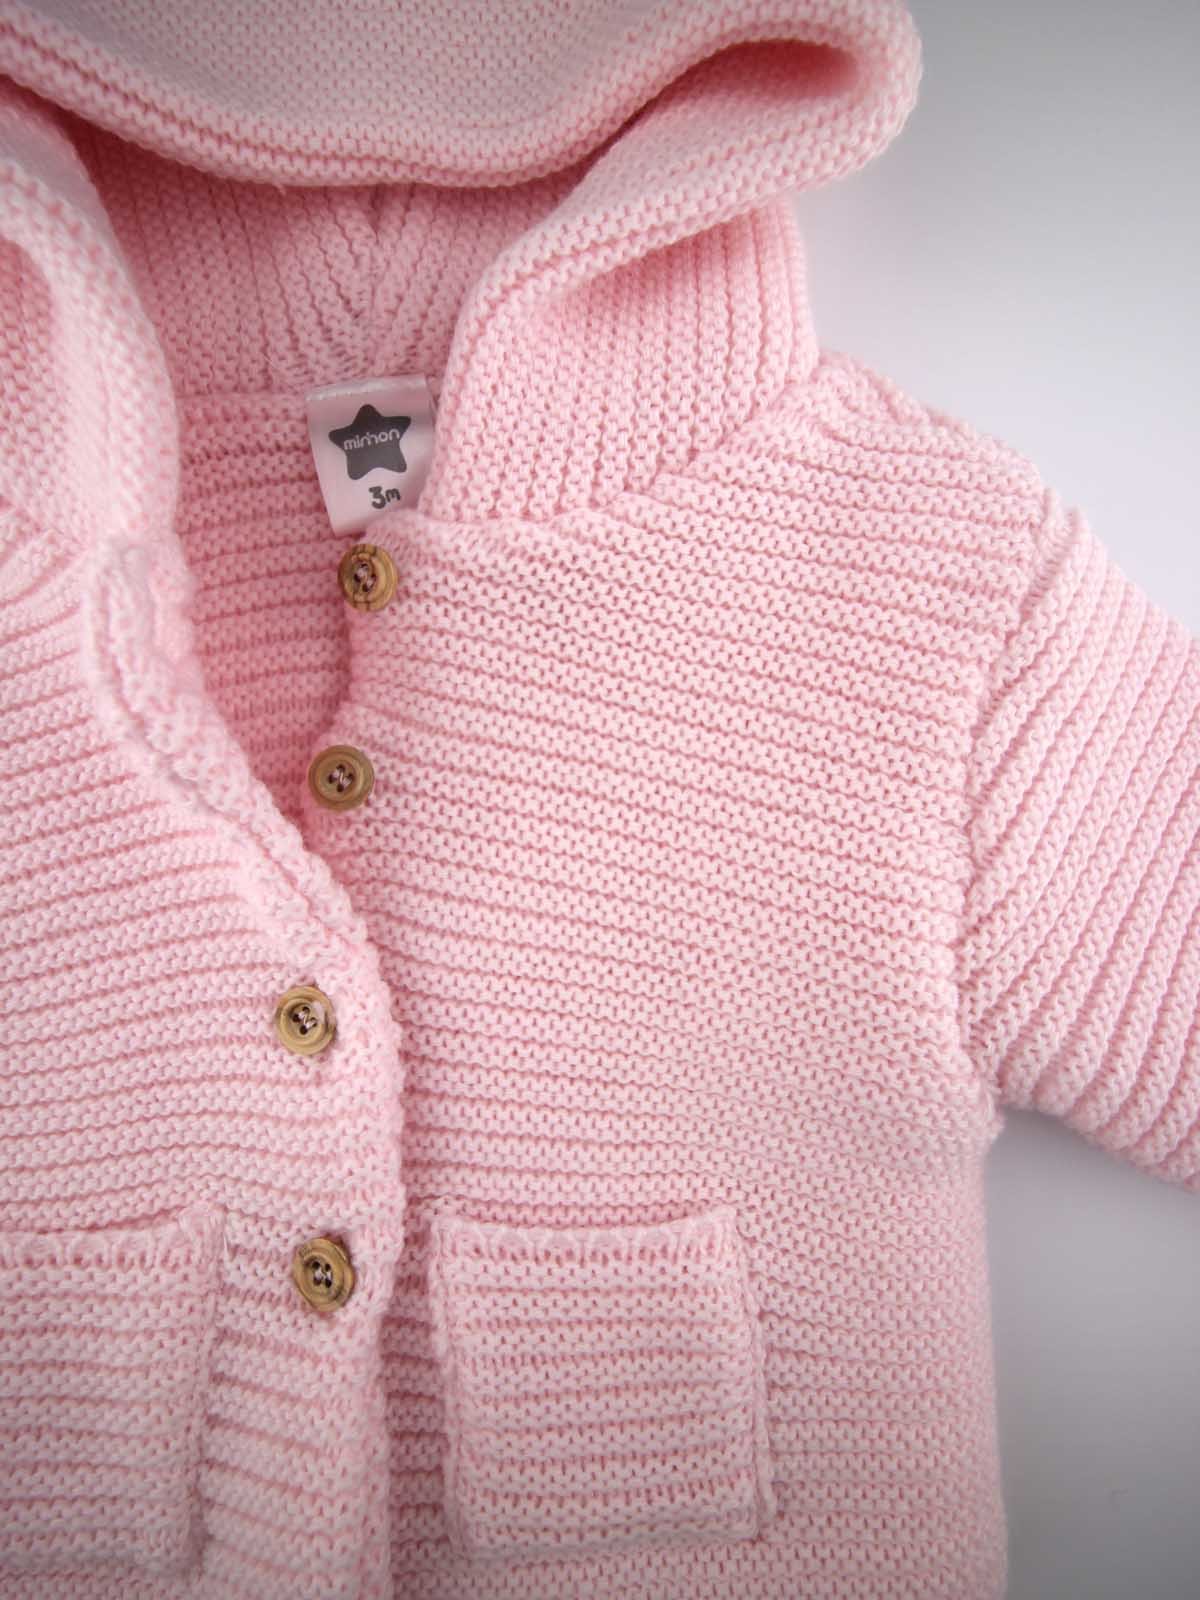 casaco para bebe menina